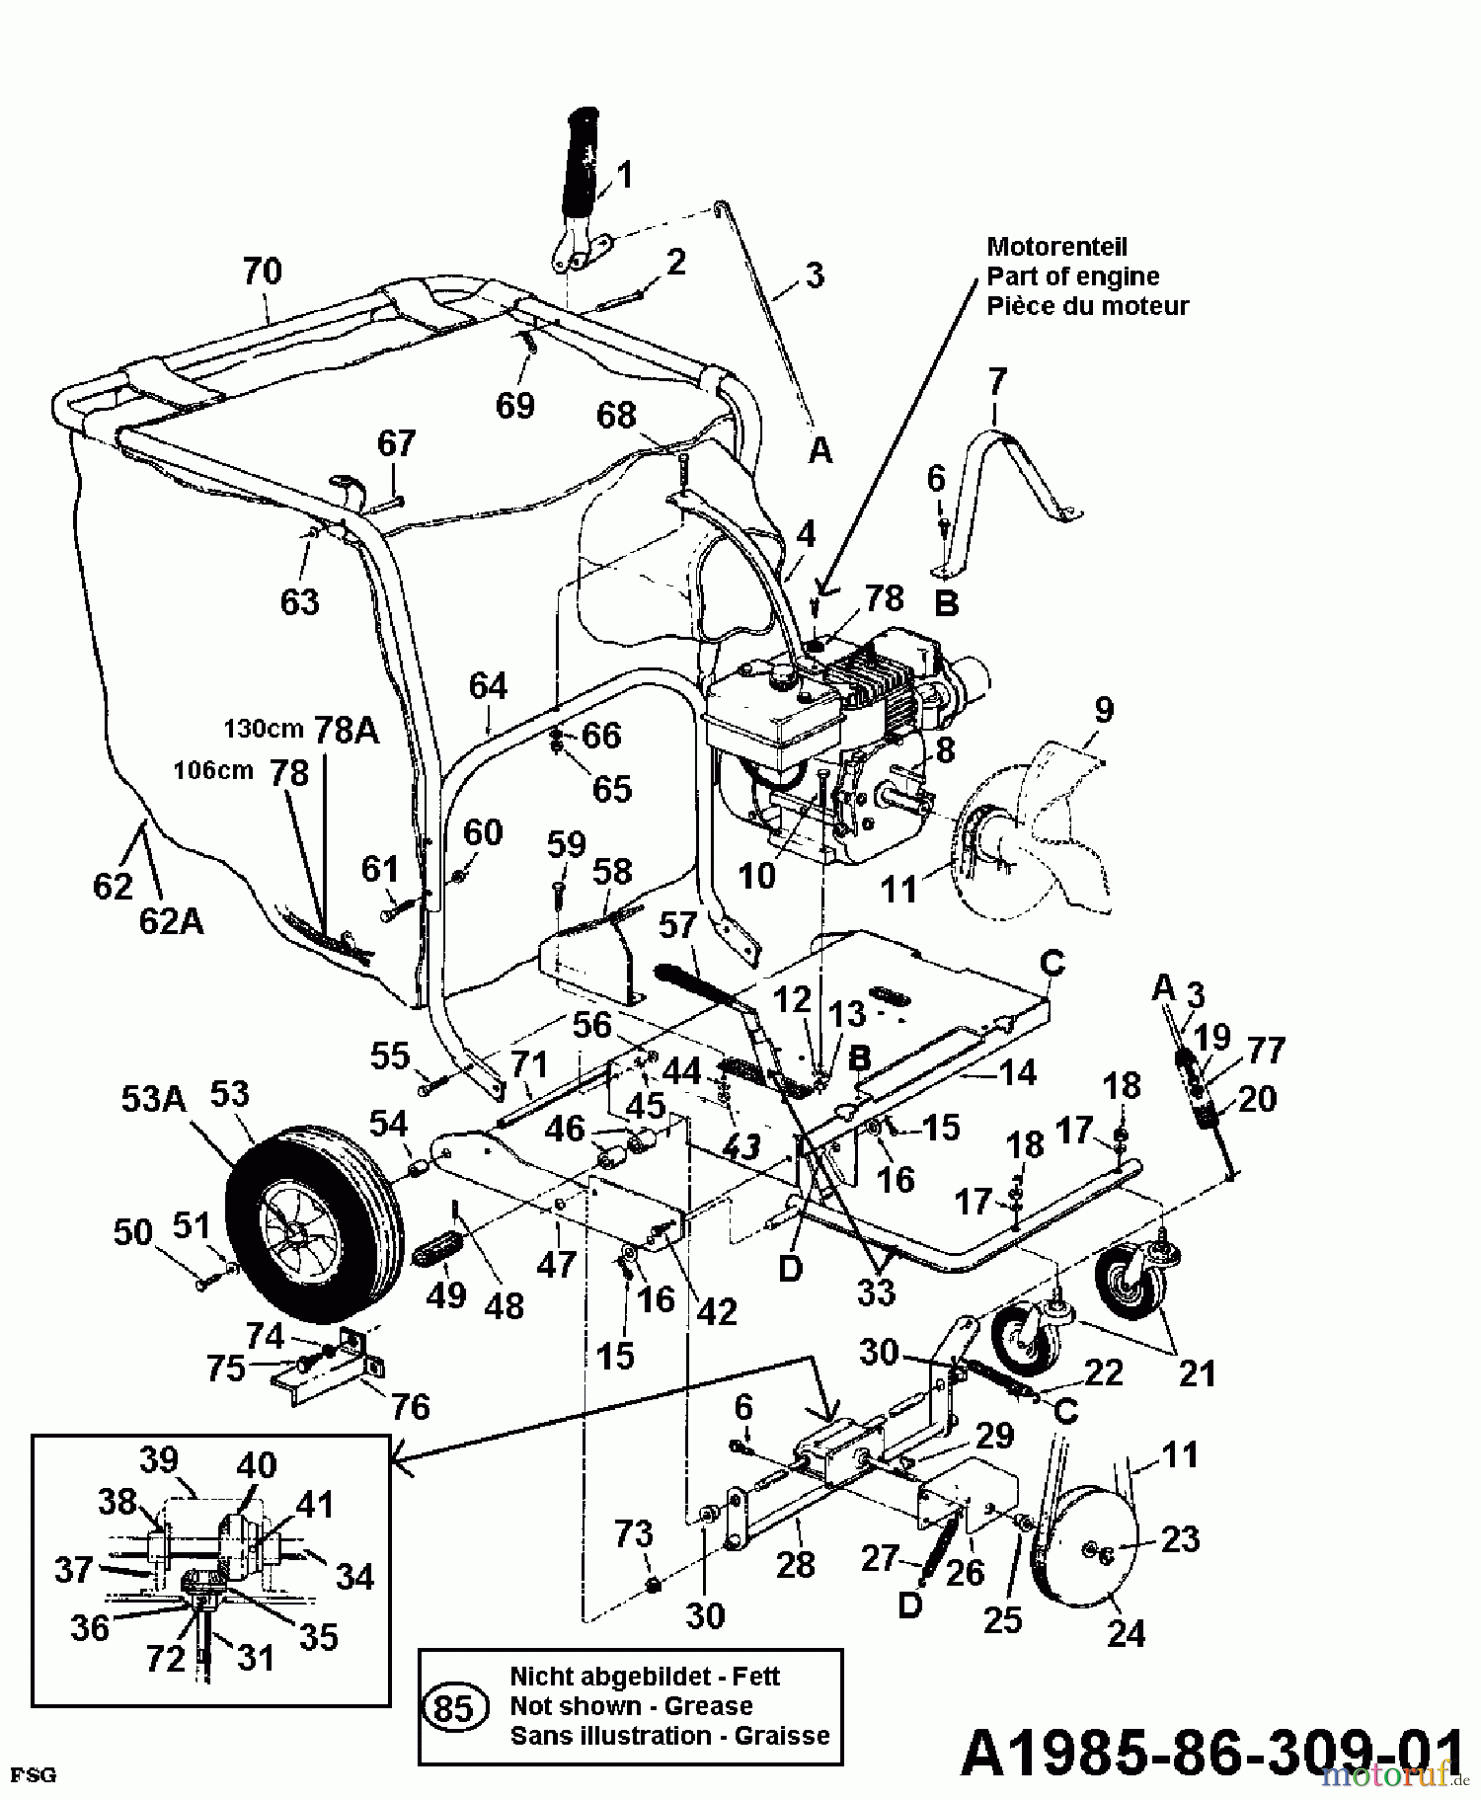  MTD Leaf blower, Blower vac Vacu-Jet-Star 245-6850  (1986) Basic machine